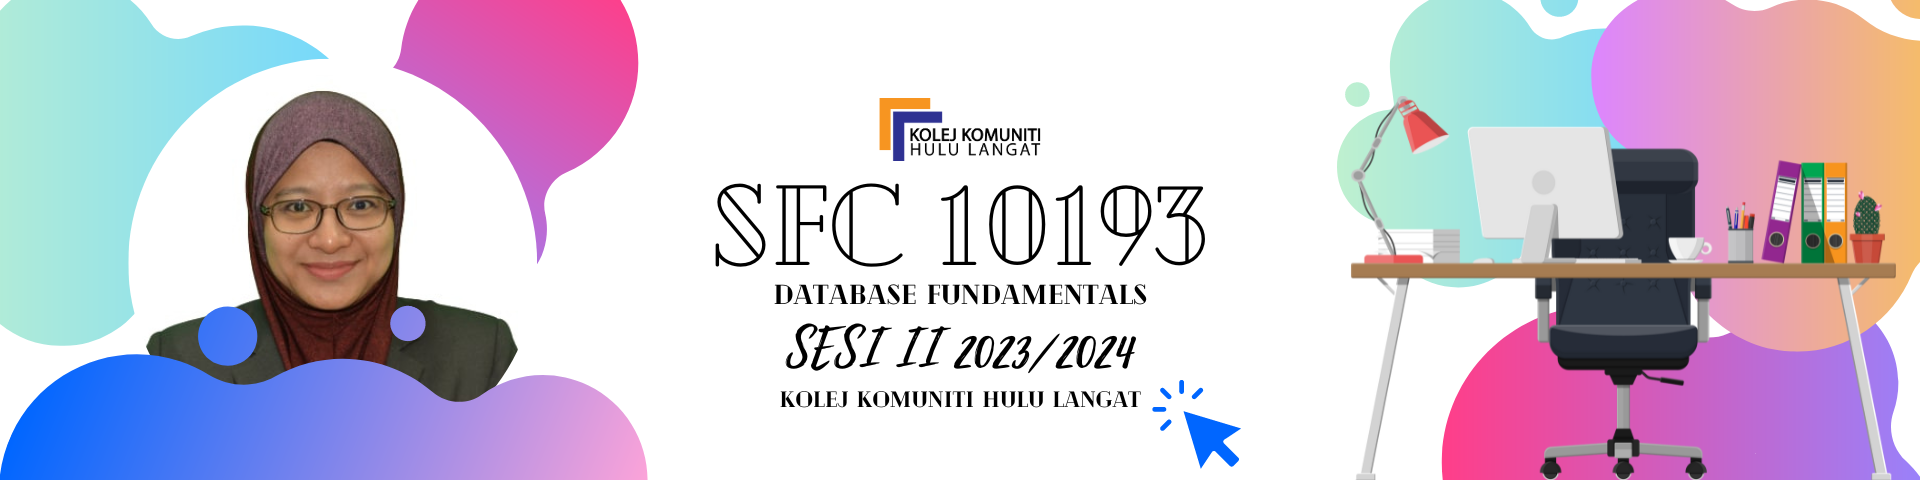 SFC 10193  DATABASE FUNDAMENTALS